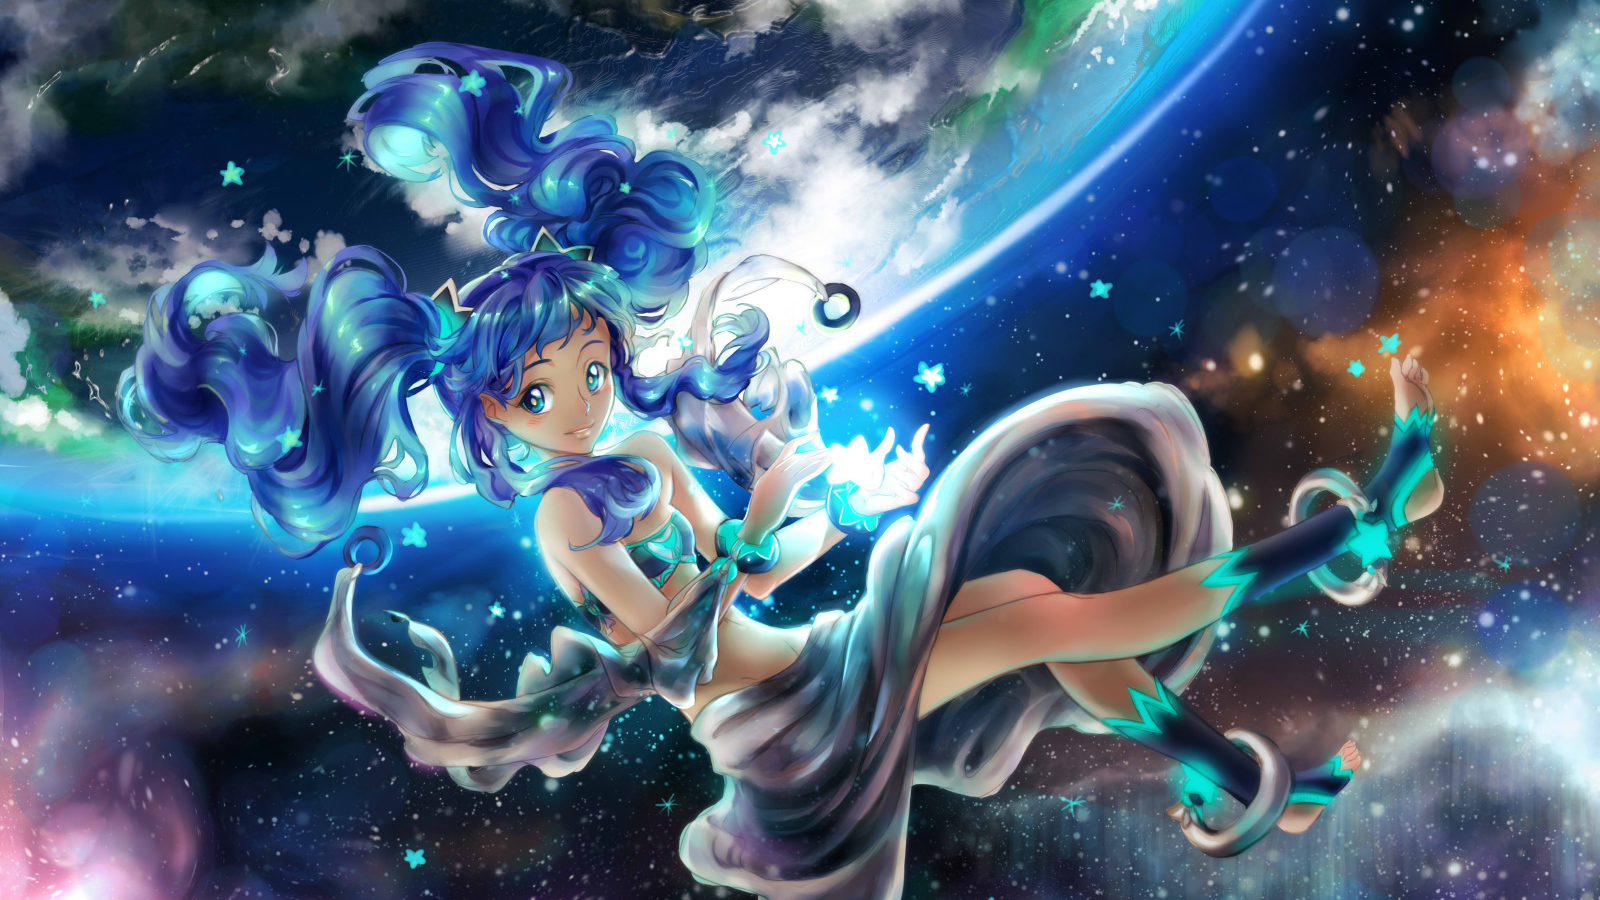 Девушка аниме с синими волосами парит в воздухе